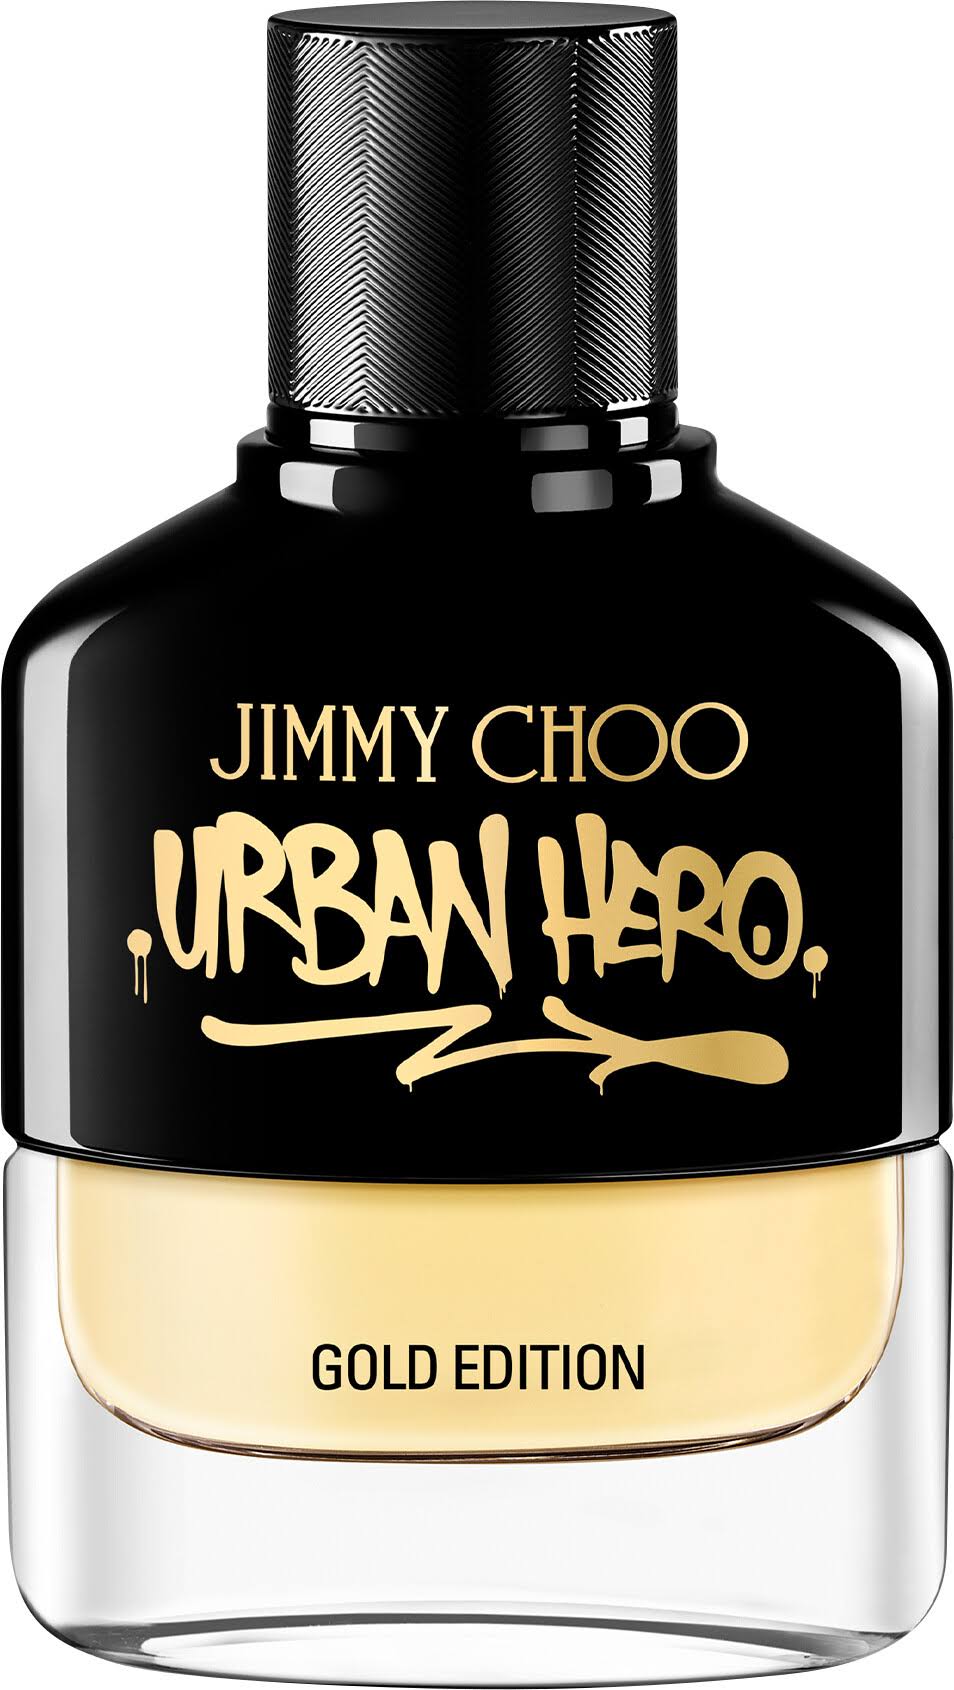 Jimmy Choo Urban Hero Gold Edition Eau de Parfum - 50ml